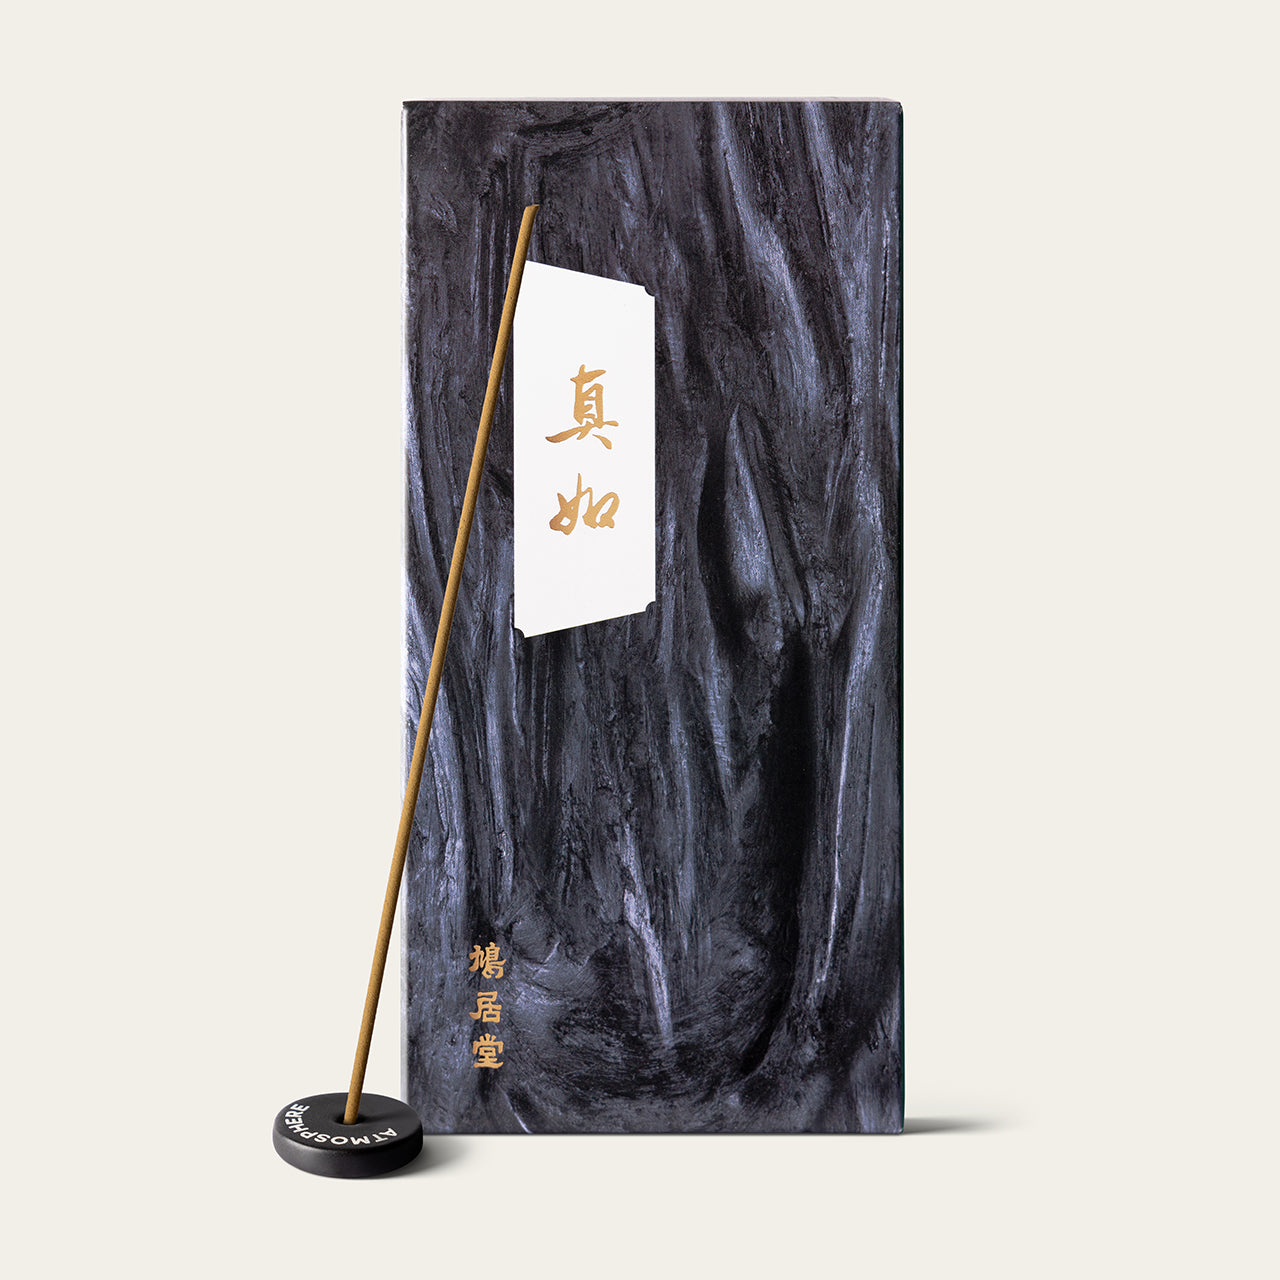 Kyukyodo Premium Suchness Shinnyo Japanese incense sticks (200 sticks) with Atmosphere ceramic incense holder